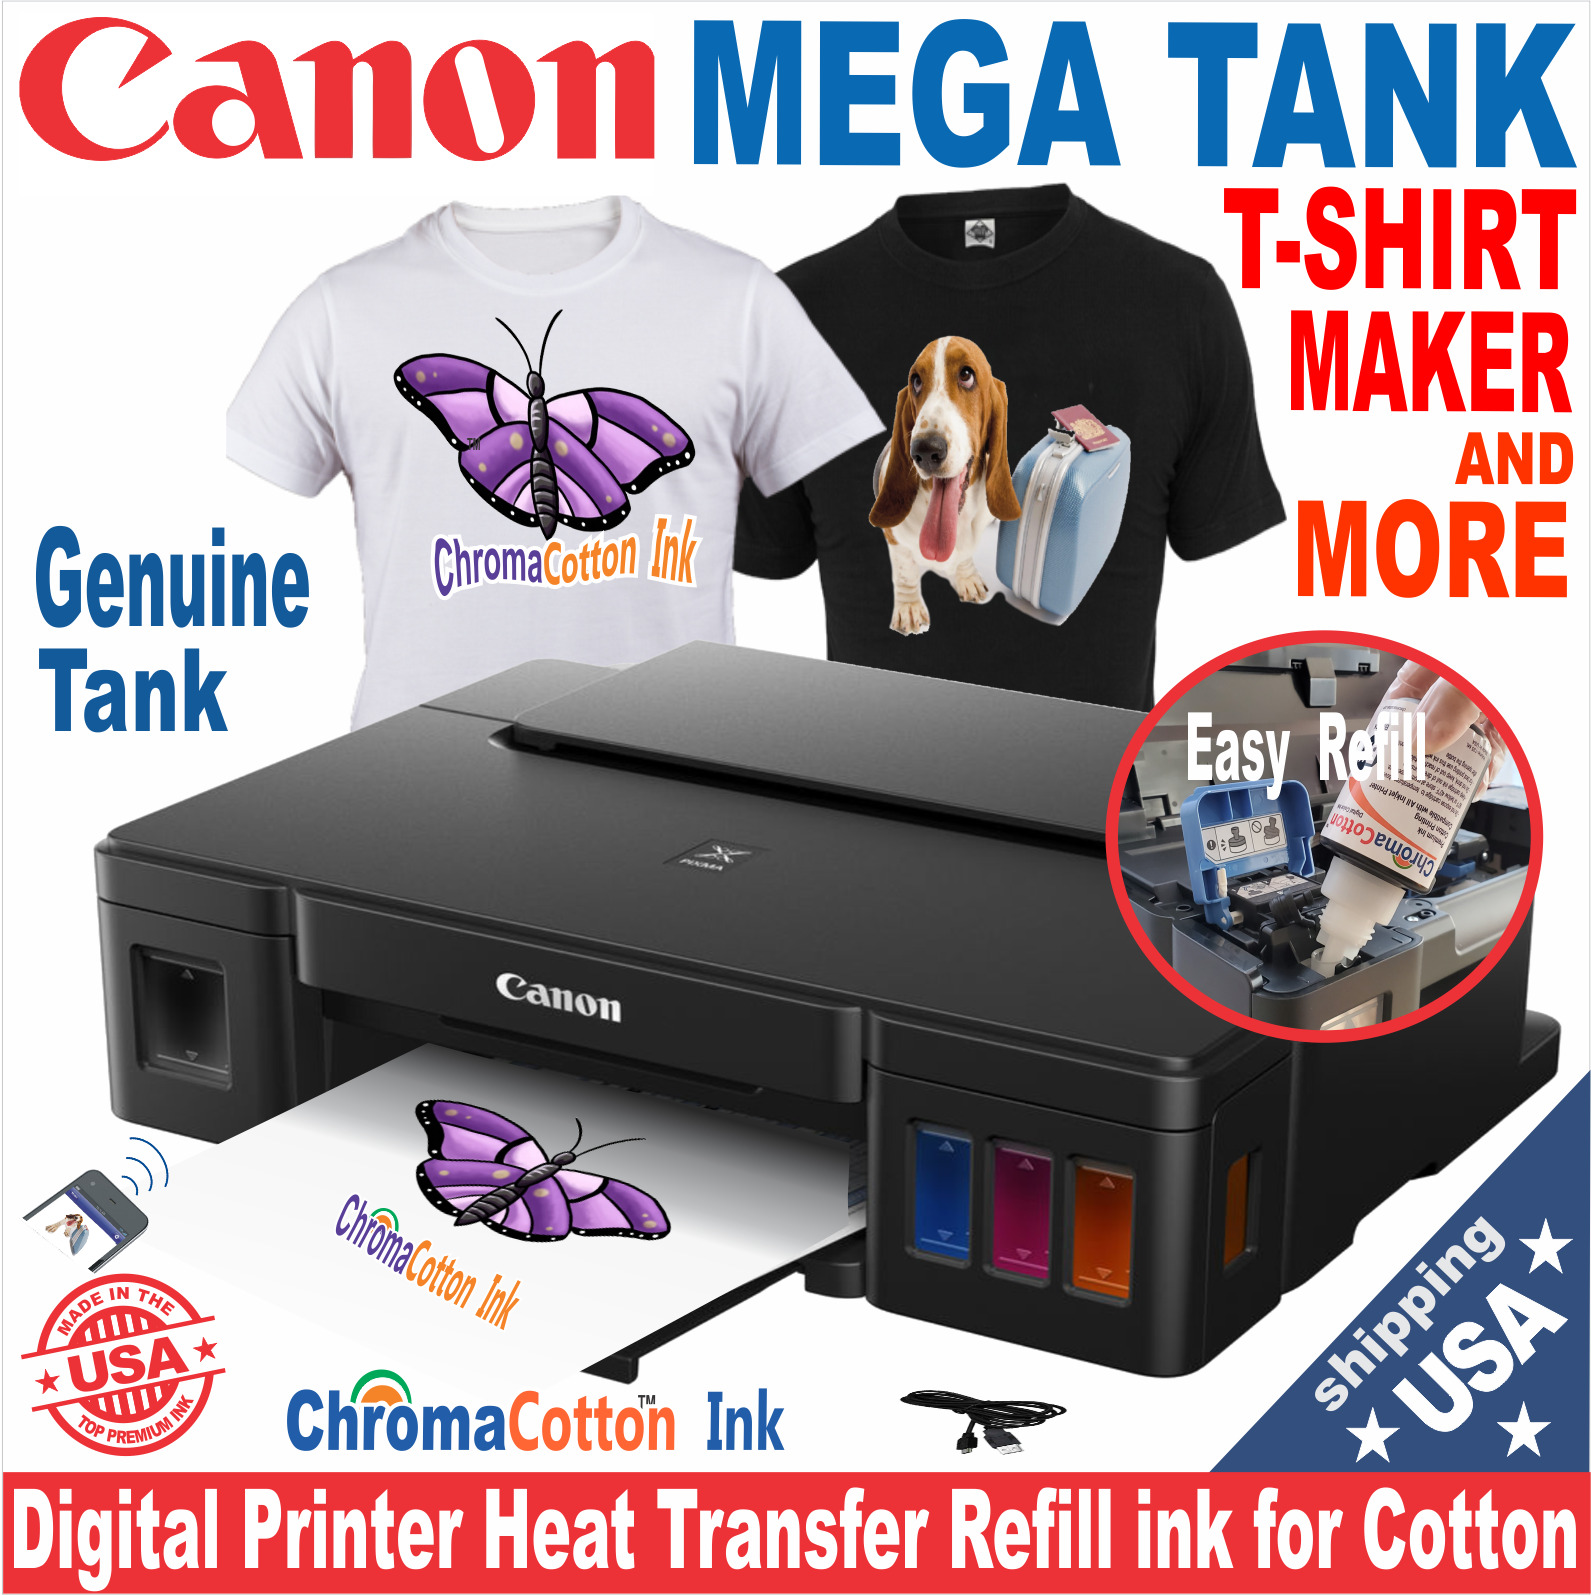 CANON PRINTER MEGA TANK REFILLABLE INK T-SHIRT MAKER KIT COMPLETE STARTER BUNDLE